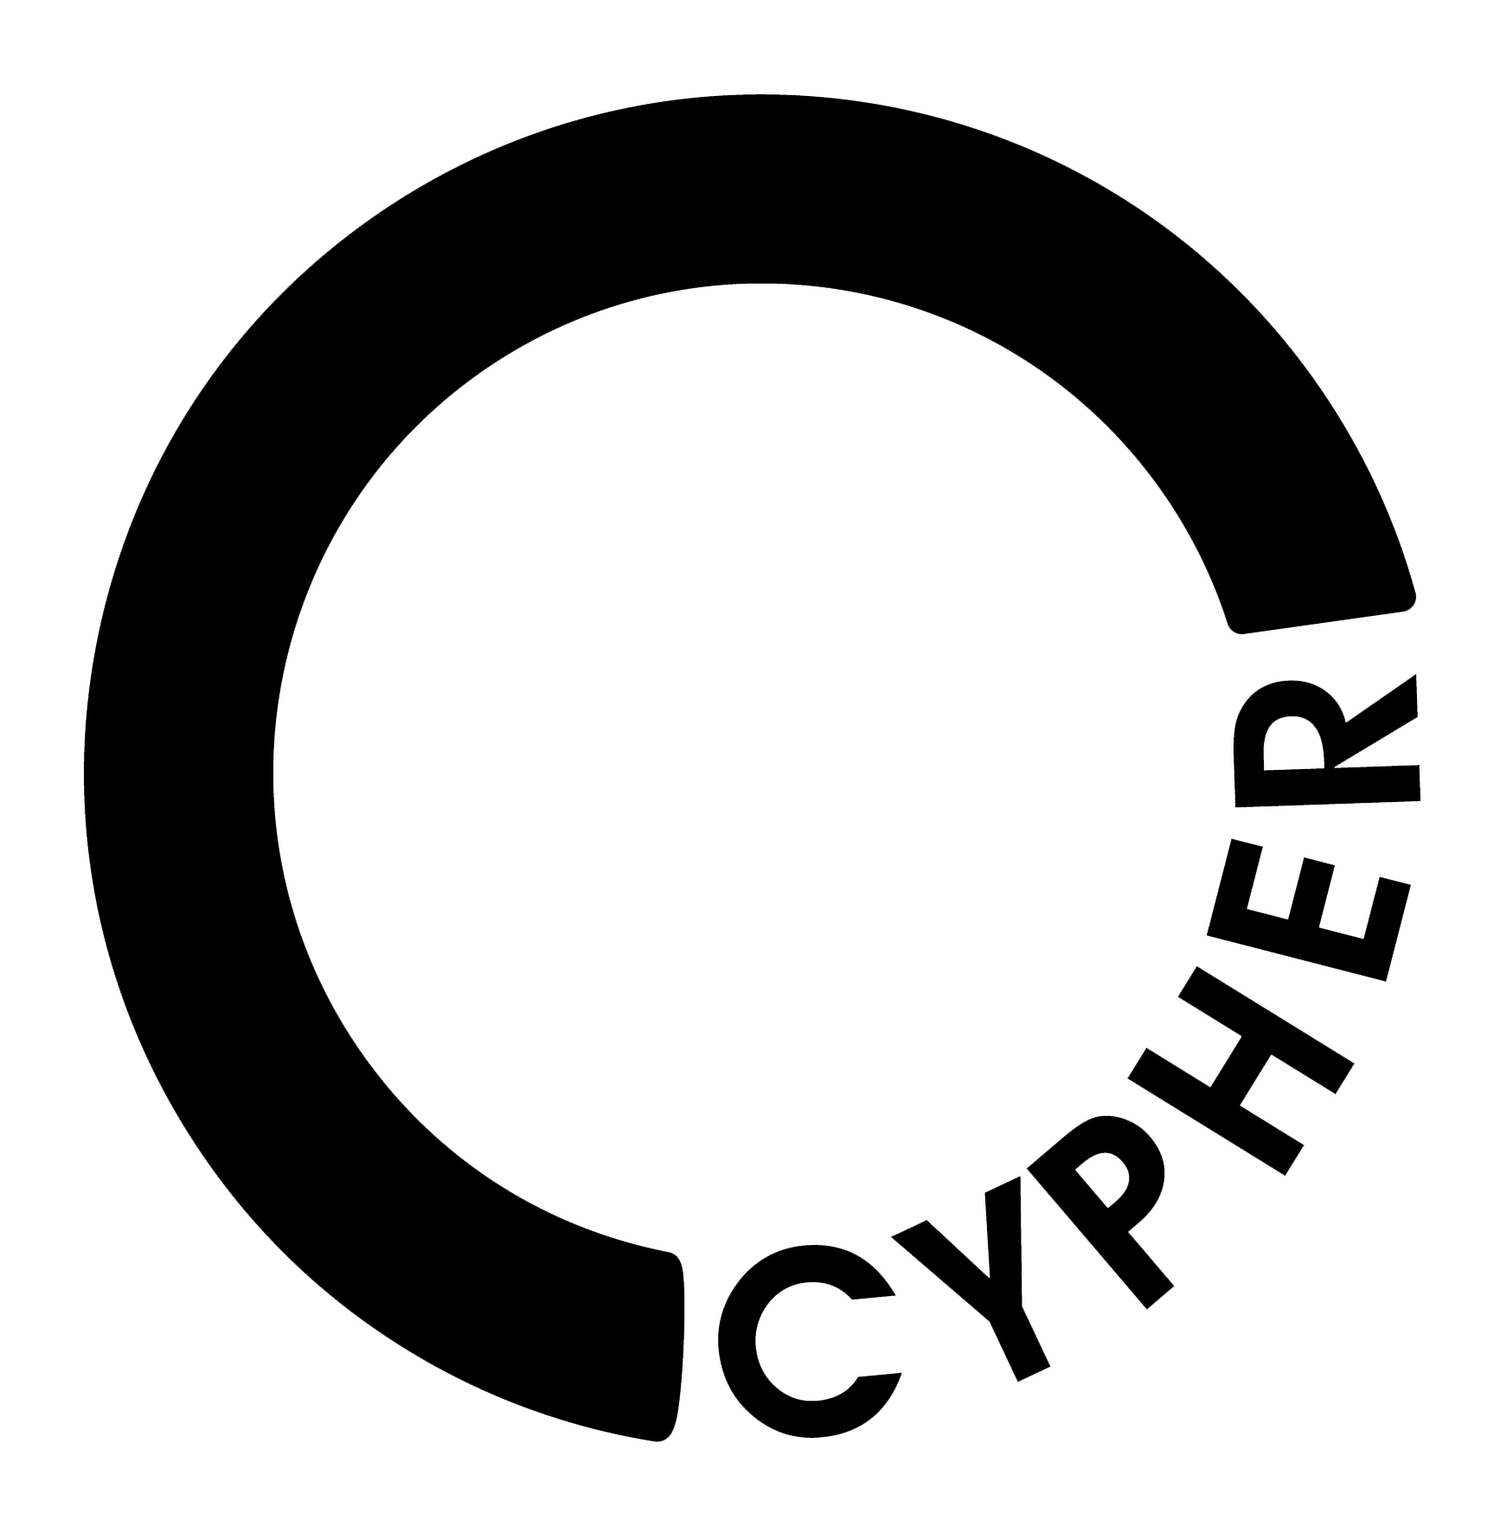 Cypher Backgrounds, Compatible - PC, Mobile, Gadgets| 1500x1527 px